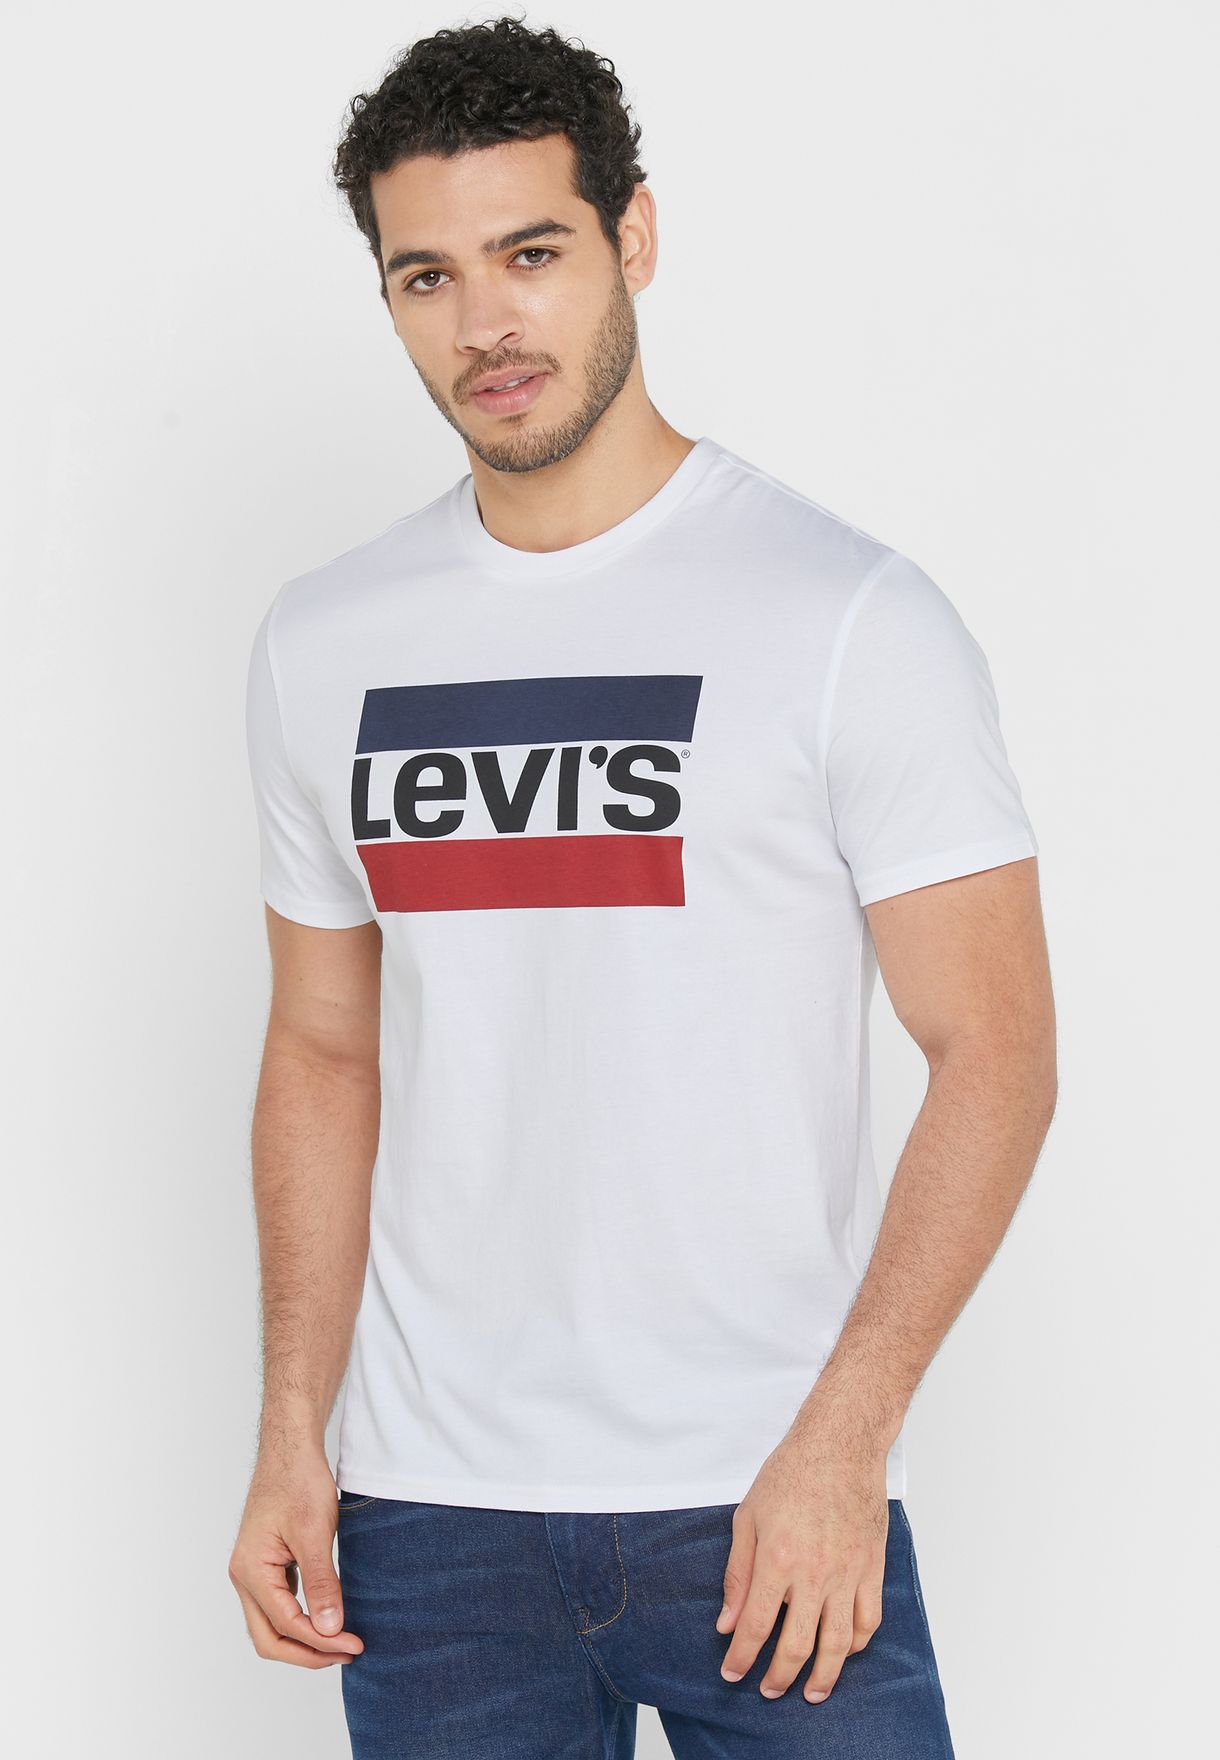 levis white shirt mens